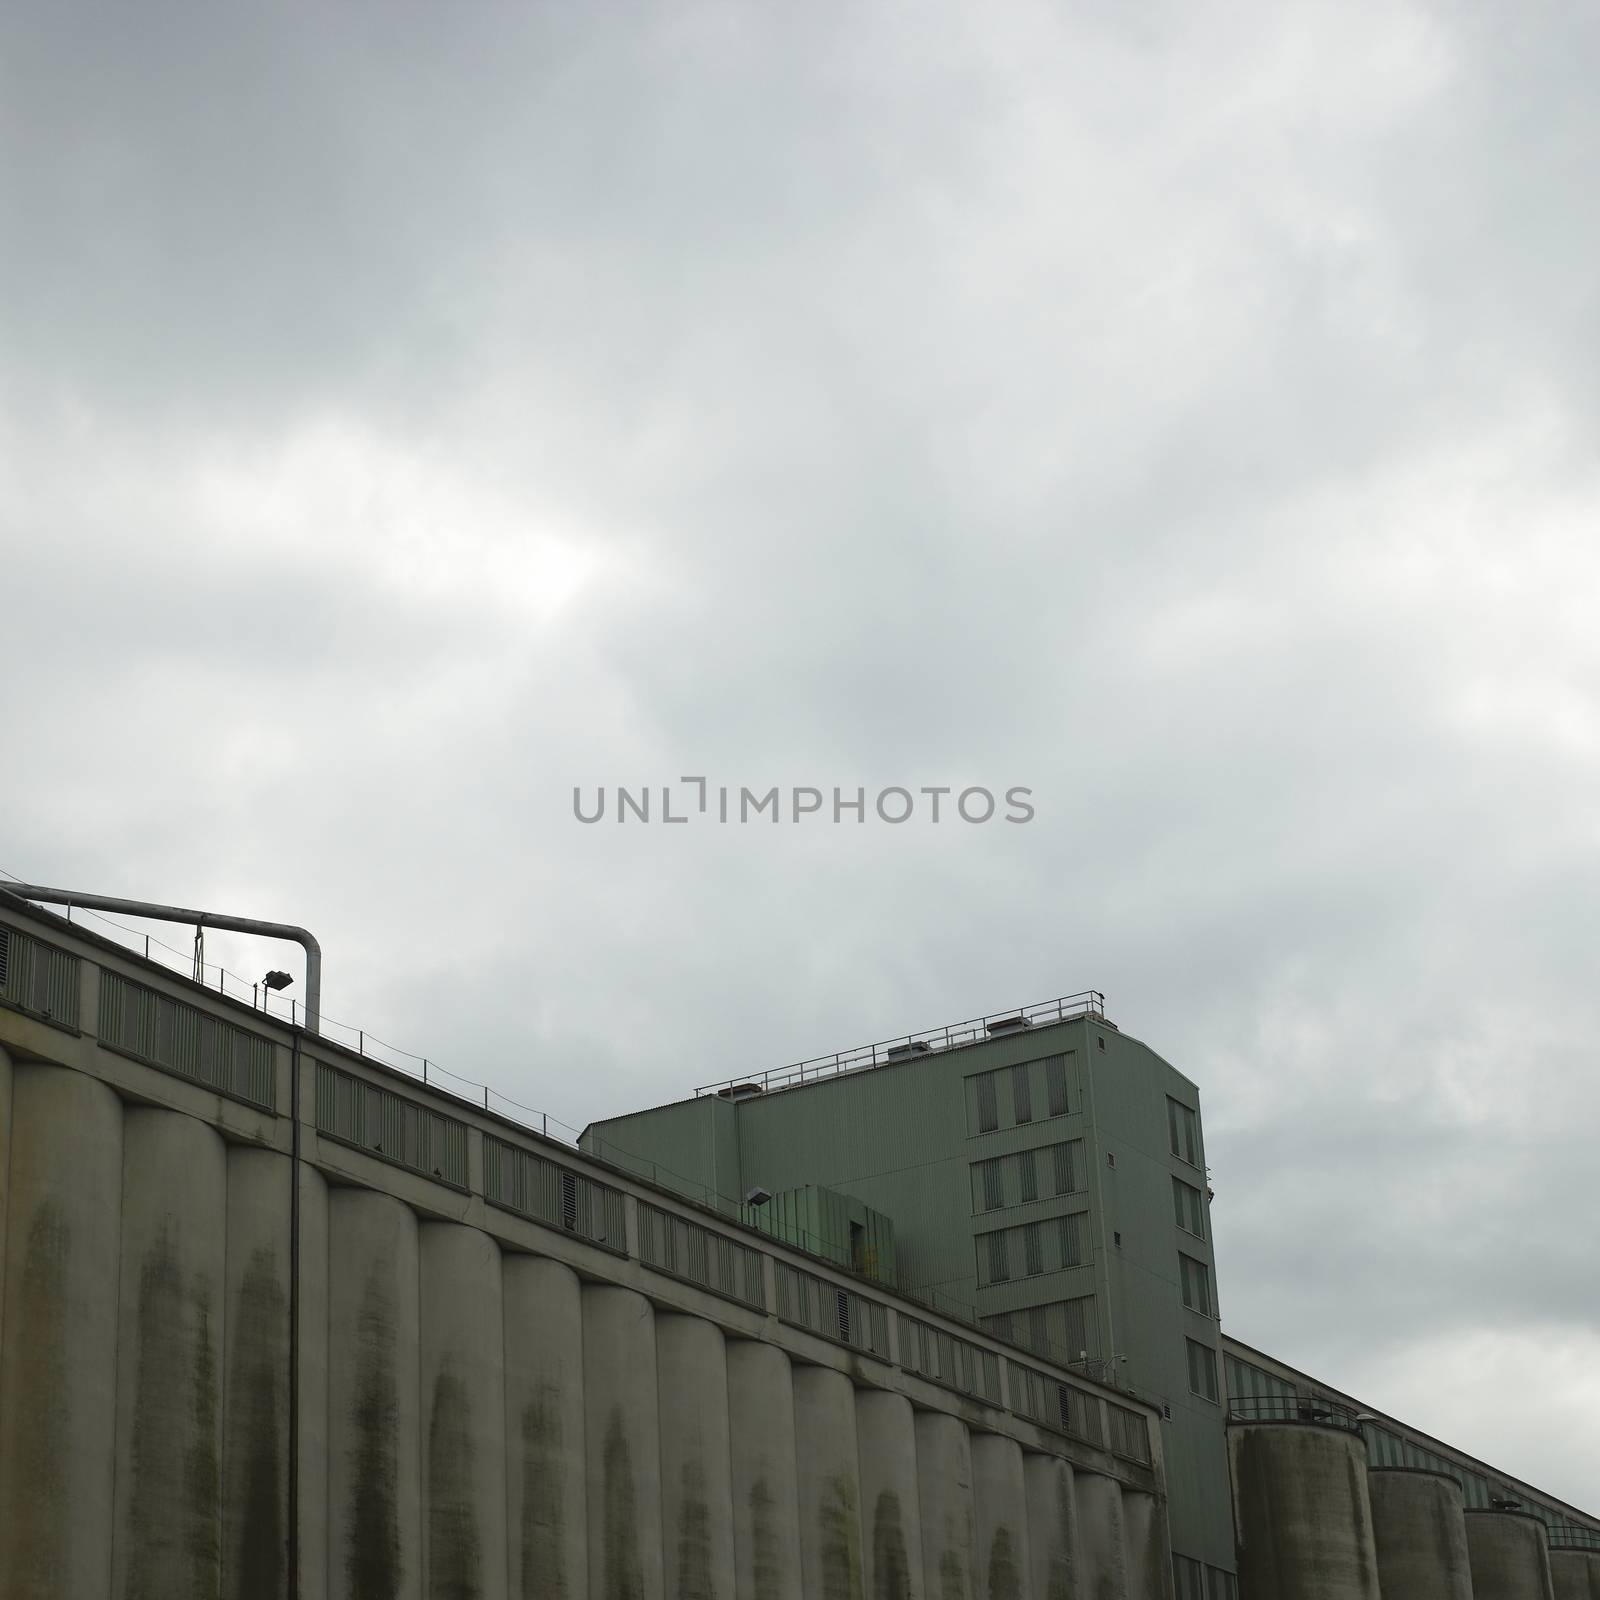 Large dark factory against grey sky